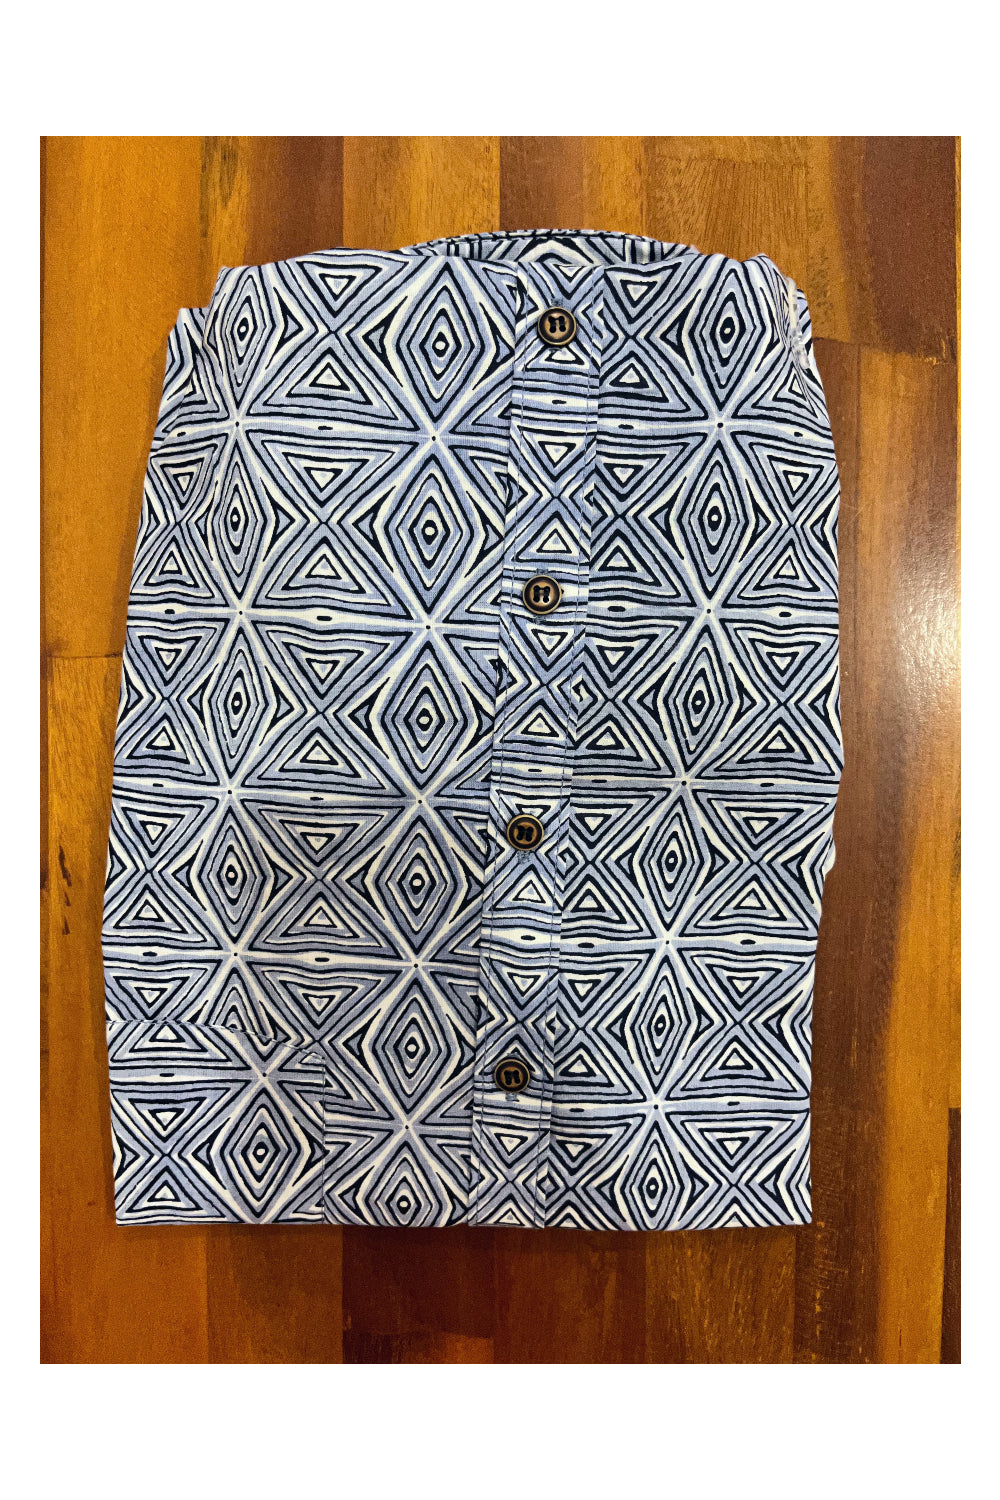 Southloom Jaipur Cotton Blue Black Hand Block Printed Shirt (Half Sleeves)